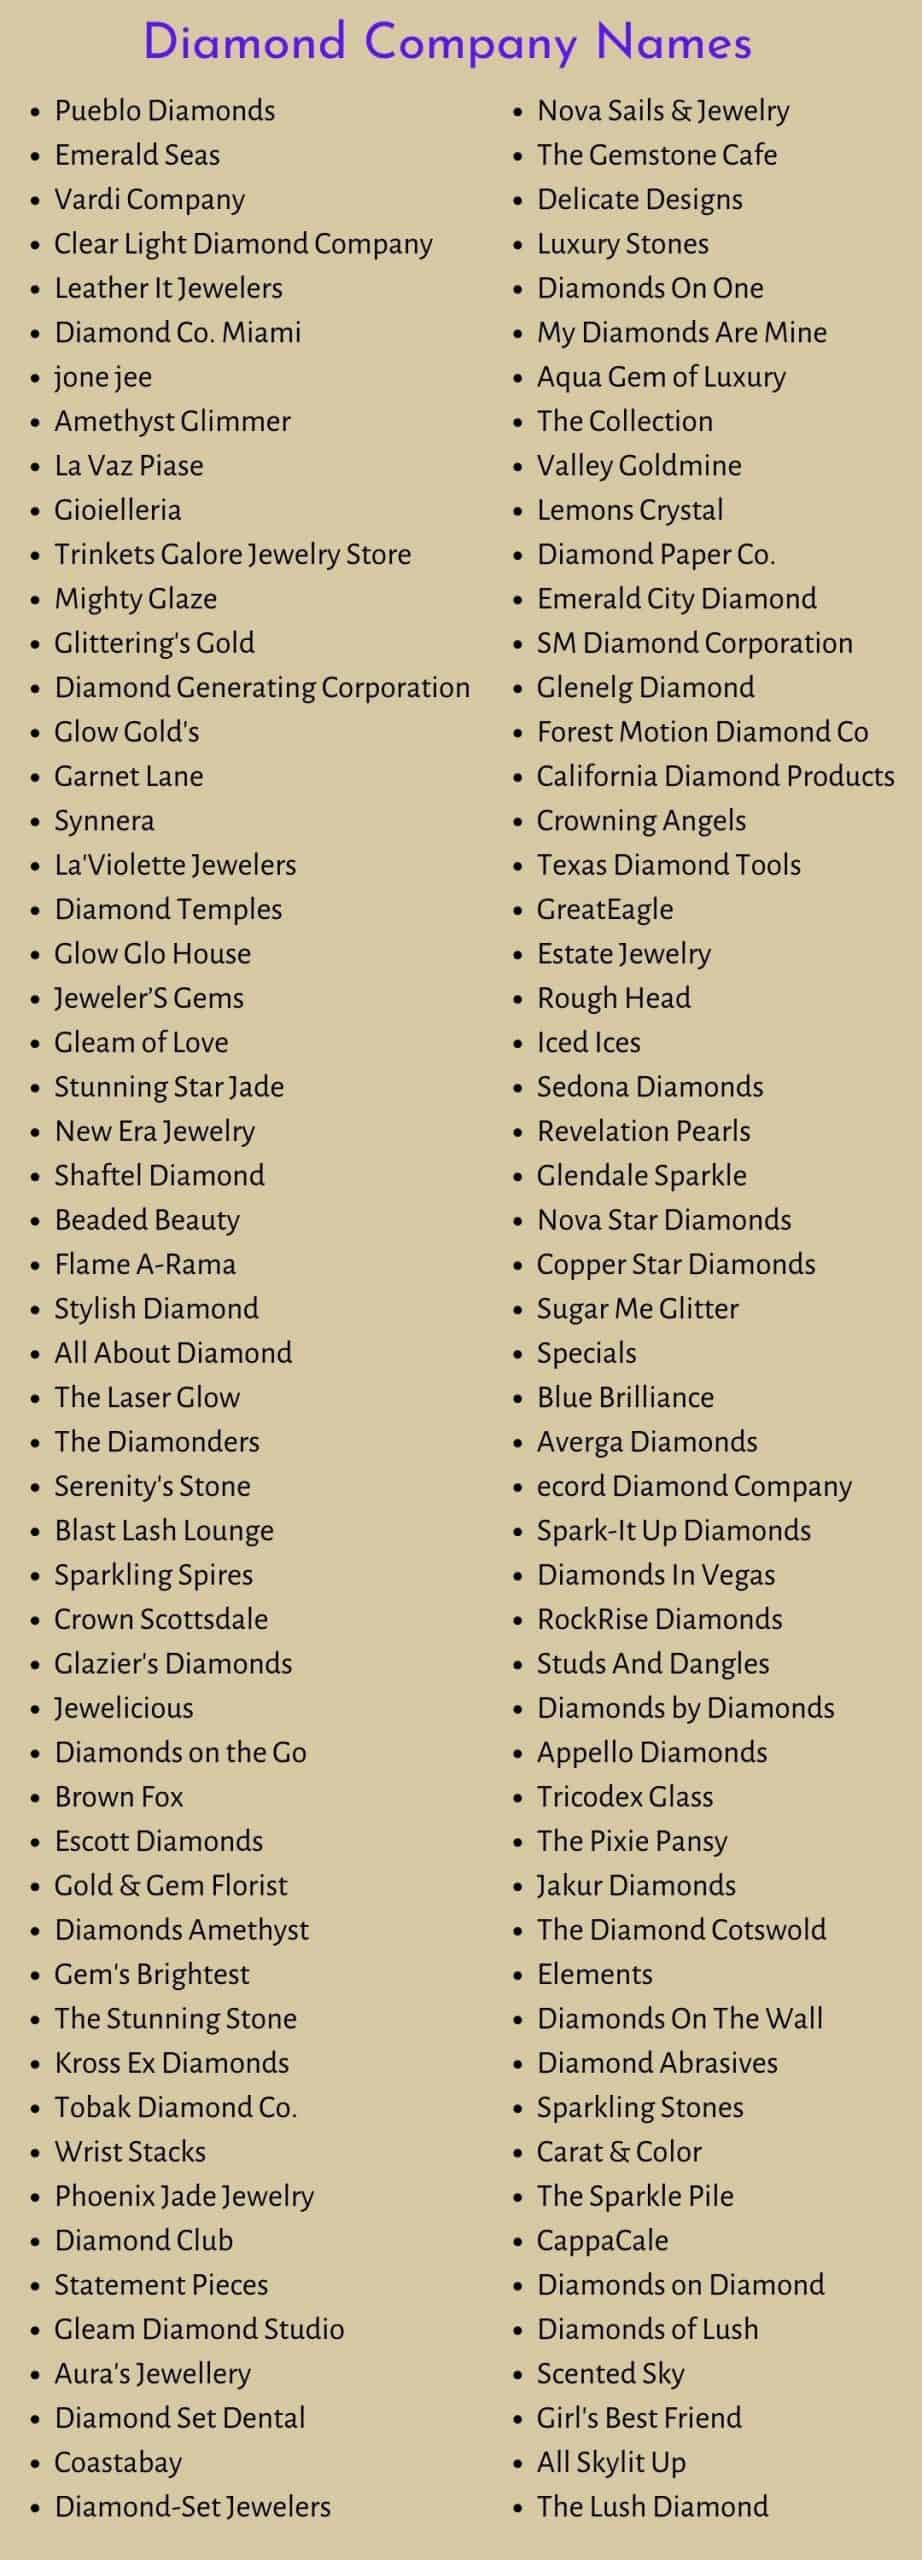 Diamond Company Names